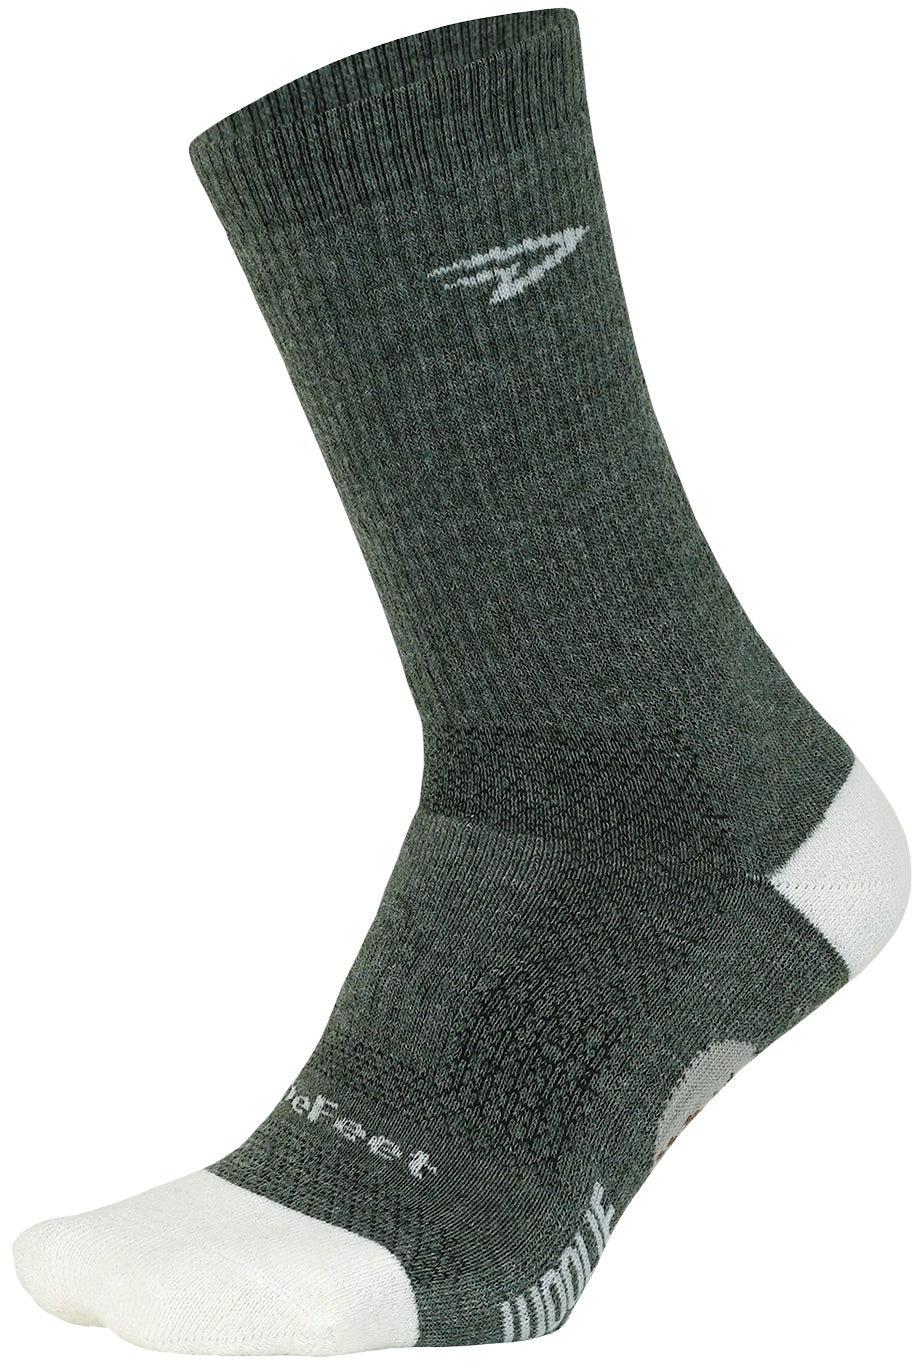 Defeet Woolie Boolie Comp 6 Socks  Loden/natural